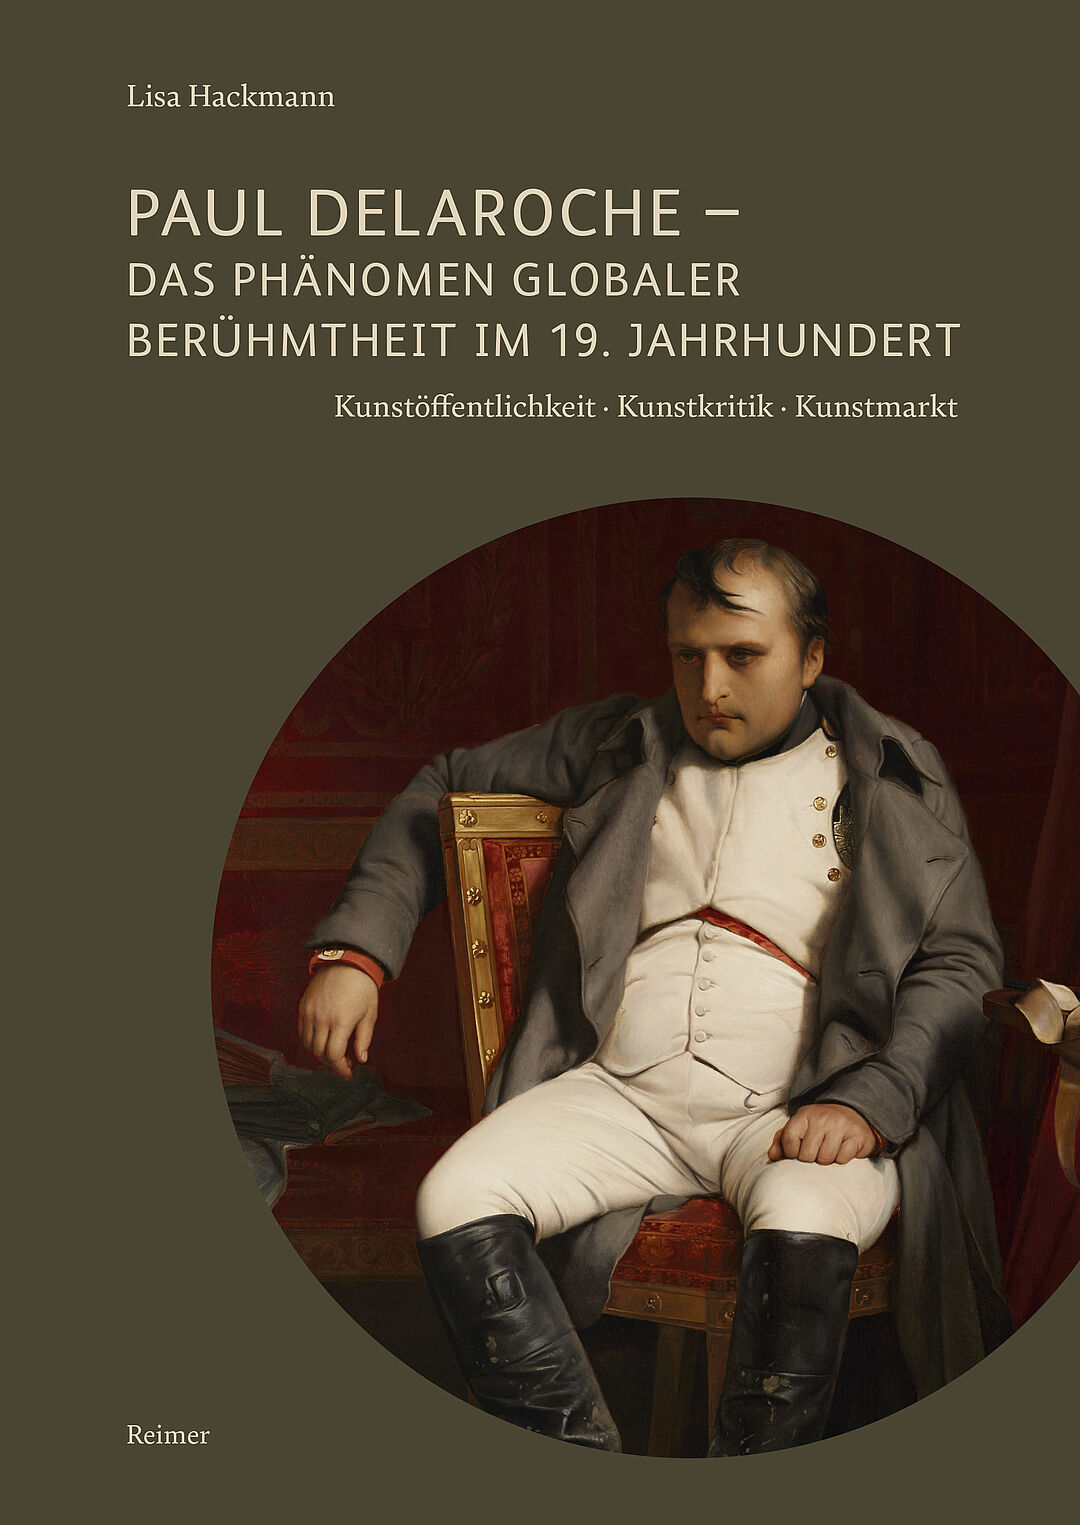 Buchcover: Lisa Hackmann: Paul Delaroche - Das Phänomen globaler Berühmtheit im 19. Jahrhundert